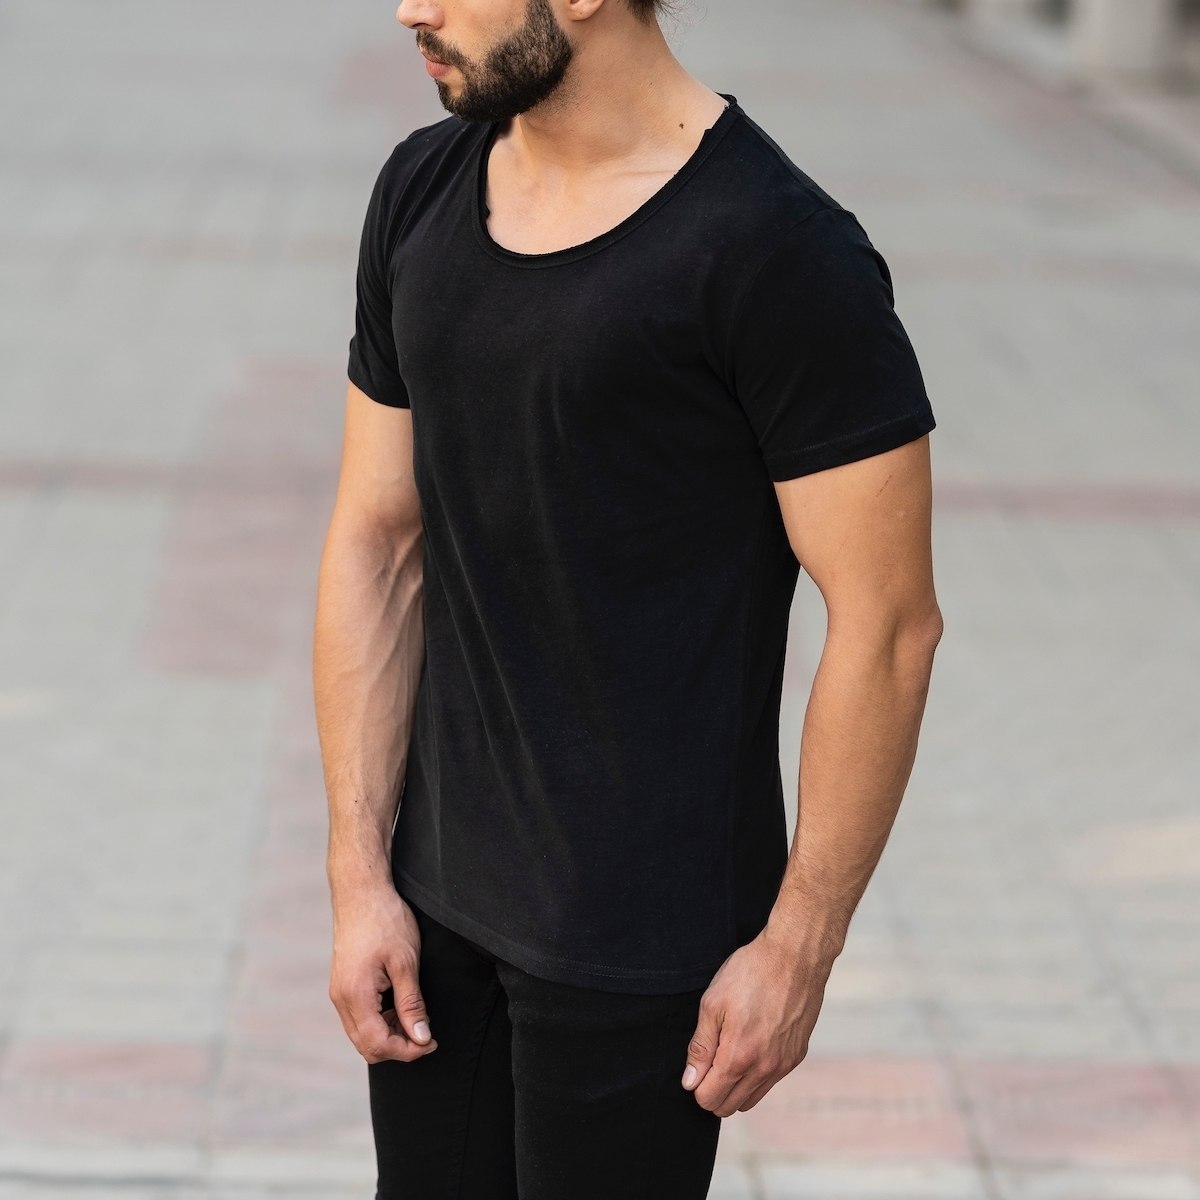 Croped Collar Black T-Shirt